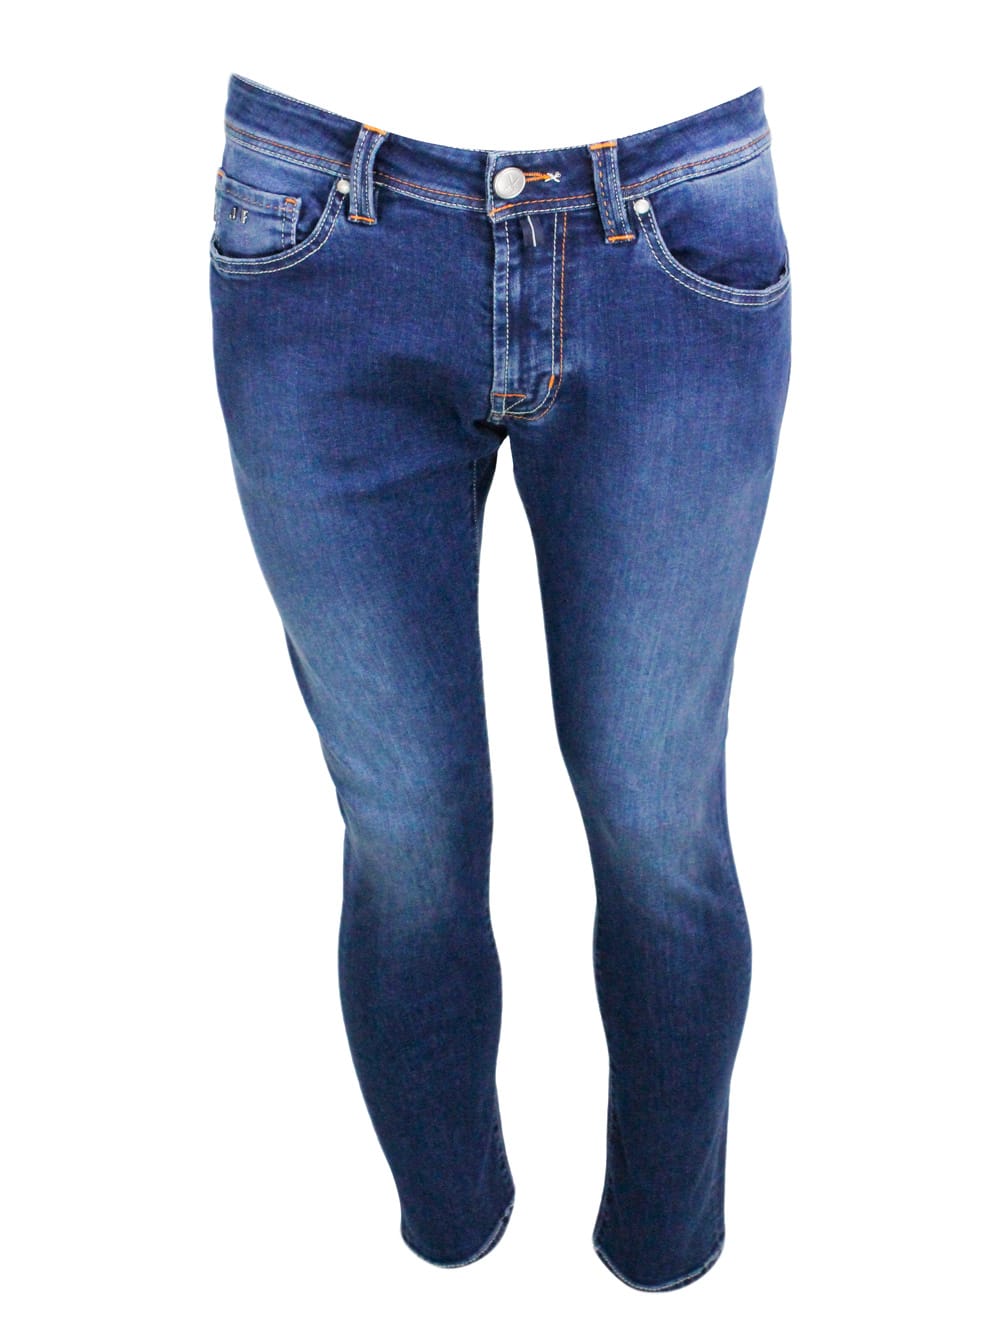 Sartoria Tramarossa Leonardo Zip Monza Trousers In 5-pocket Super Stretch Selvedge Denim With Contrasting Color Tailored